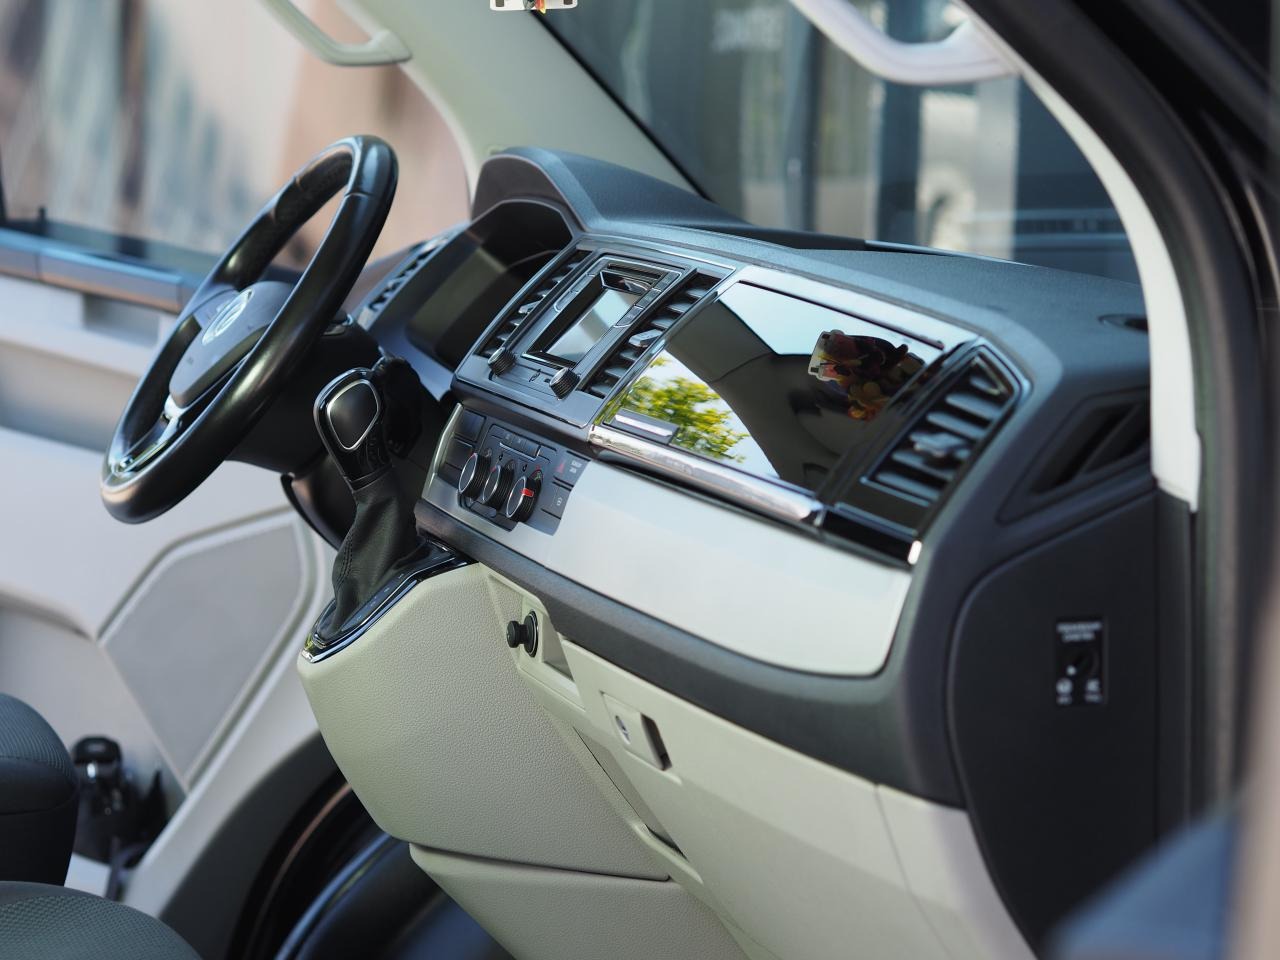 VW T6 Comfort Dash Interior Full Styling Kit